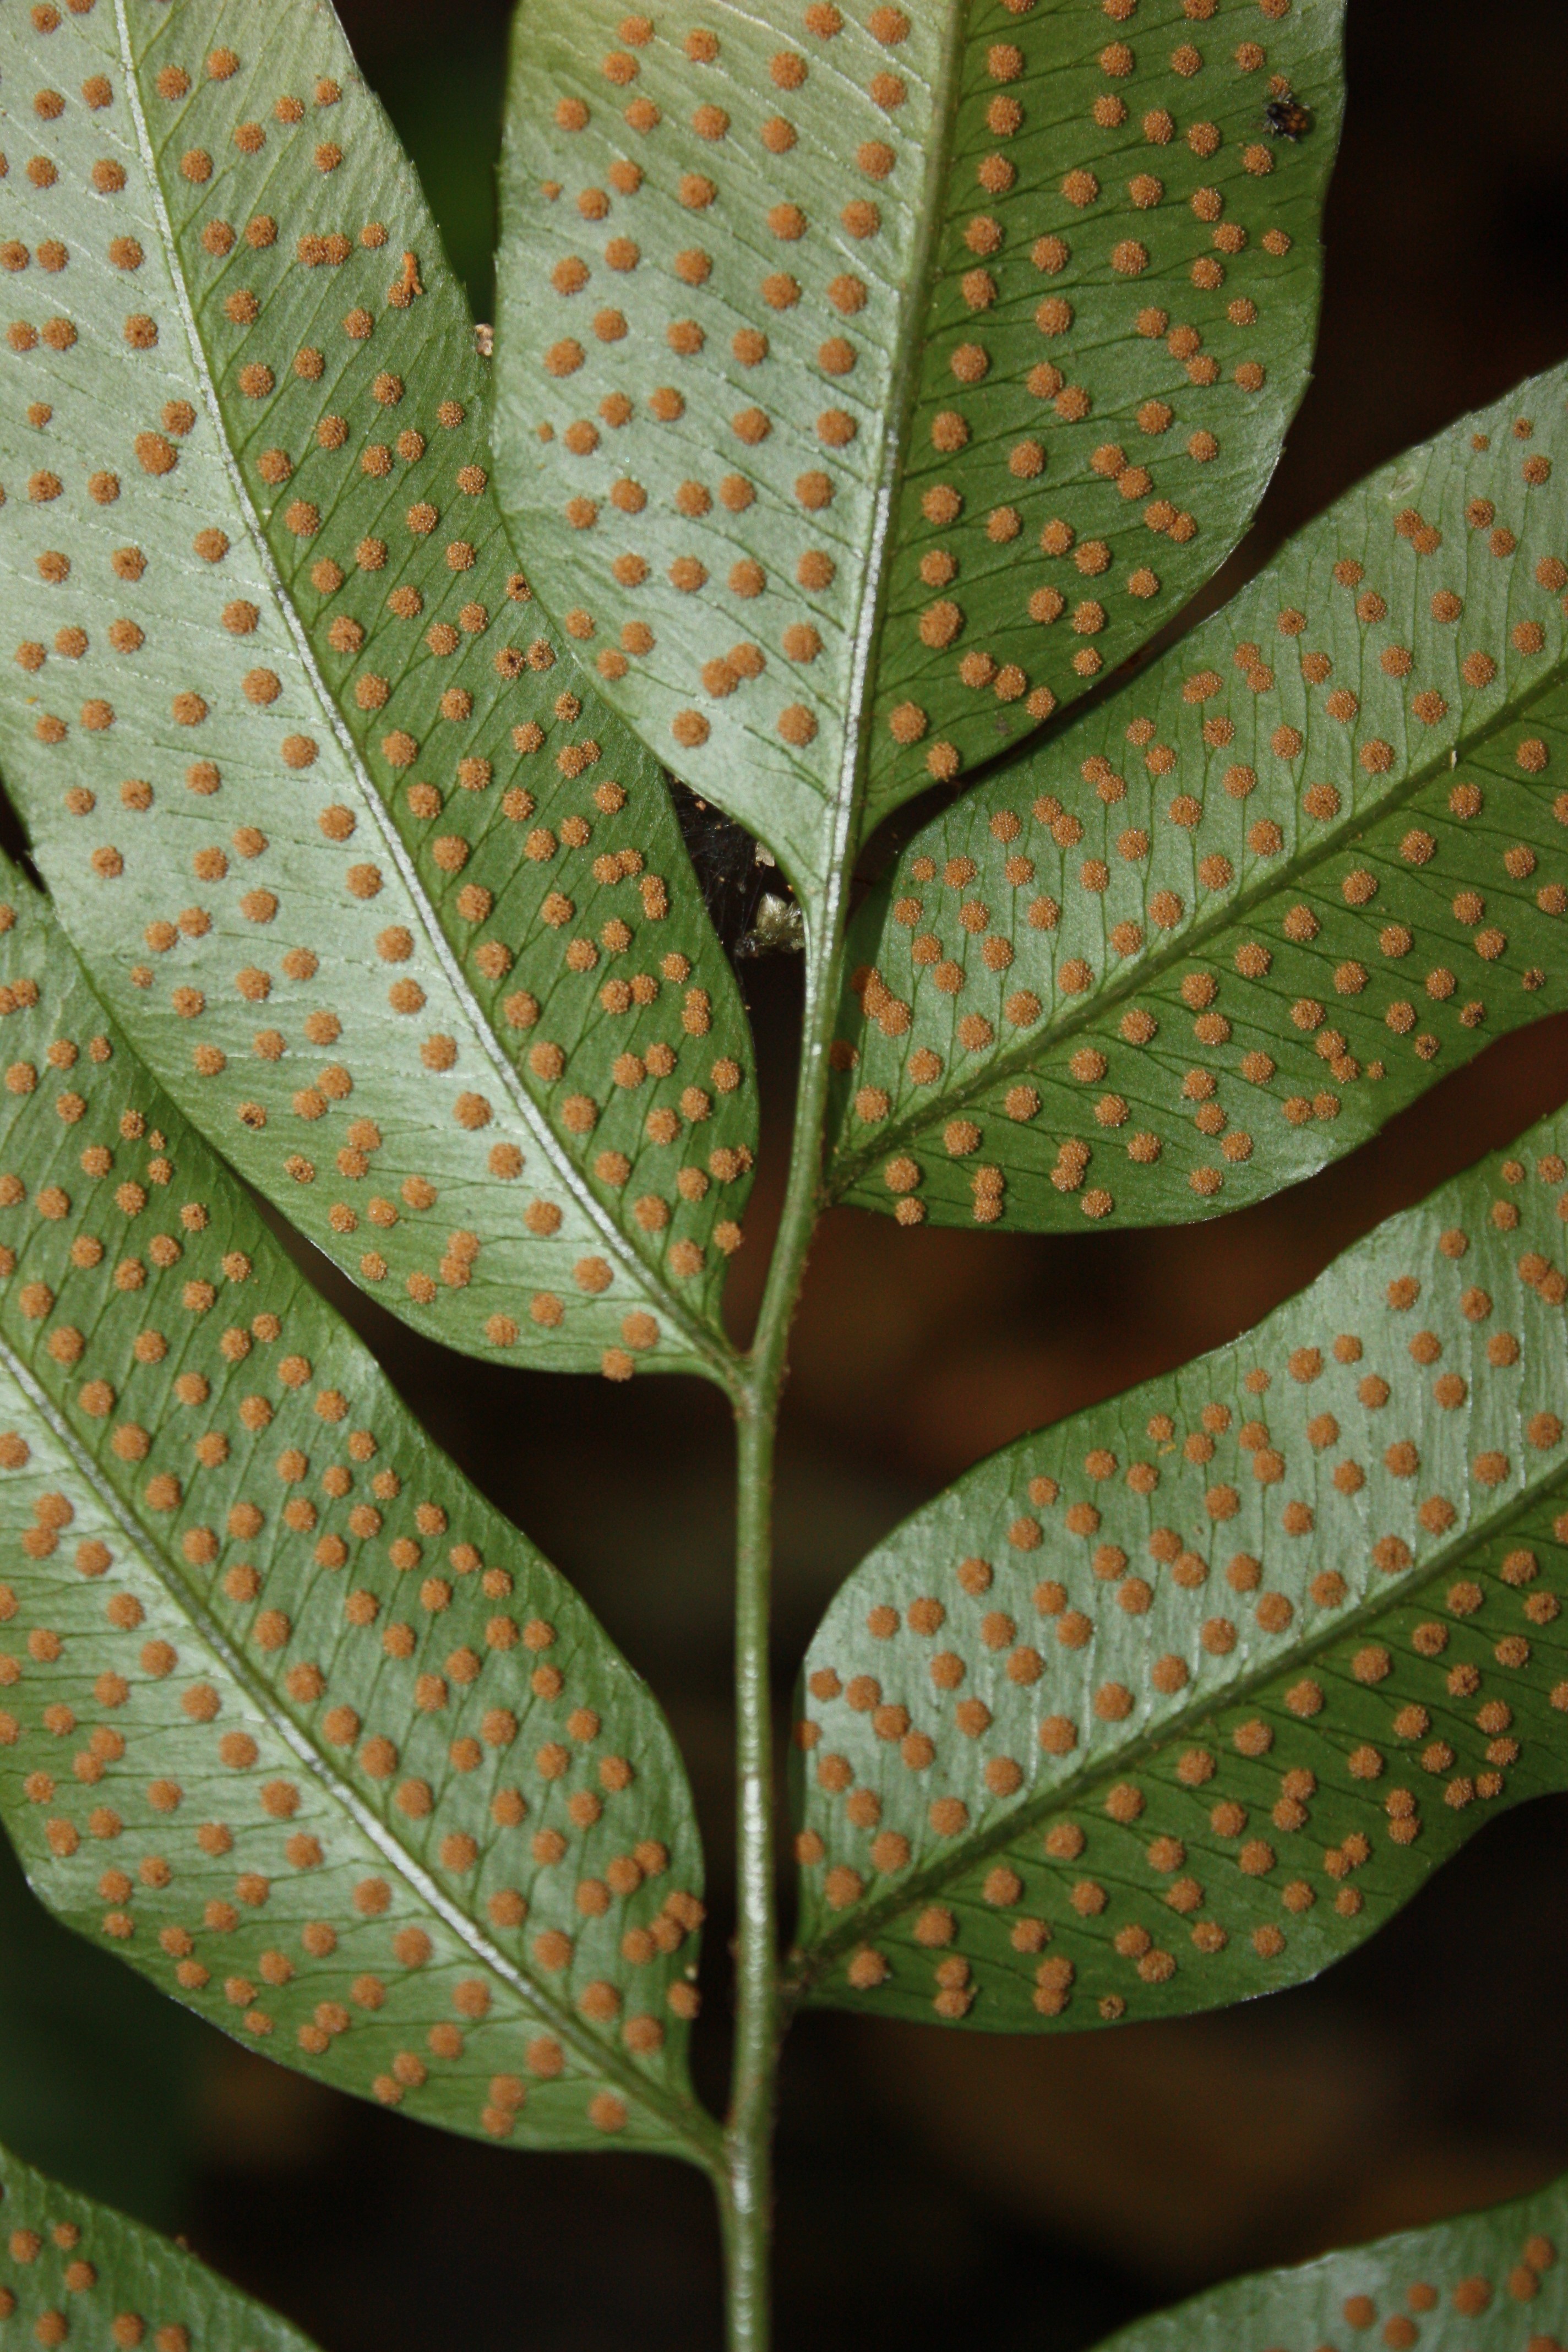 Phanerophlebia juglandifolia